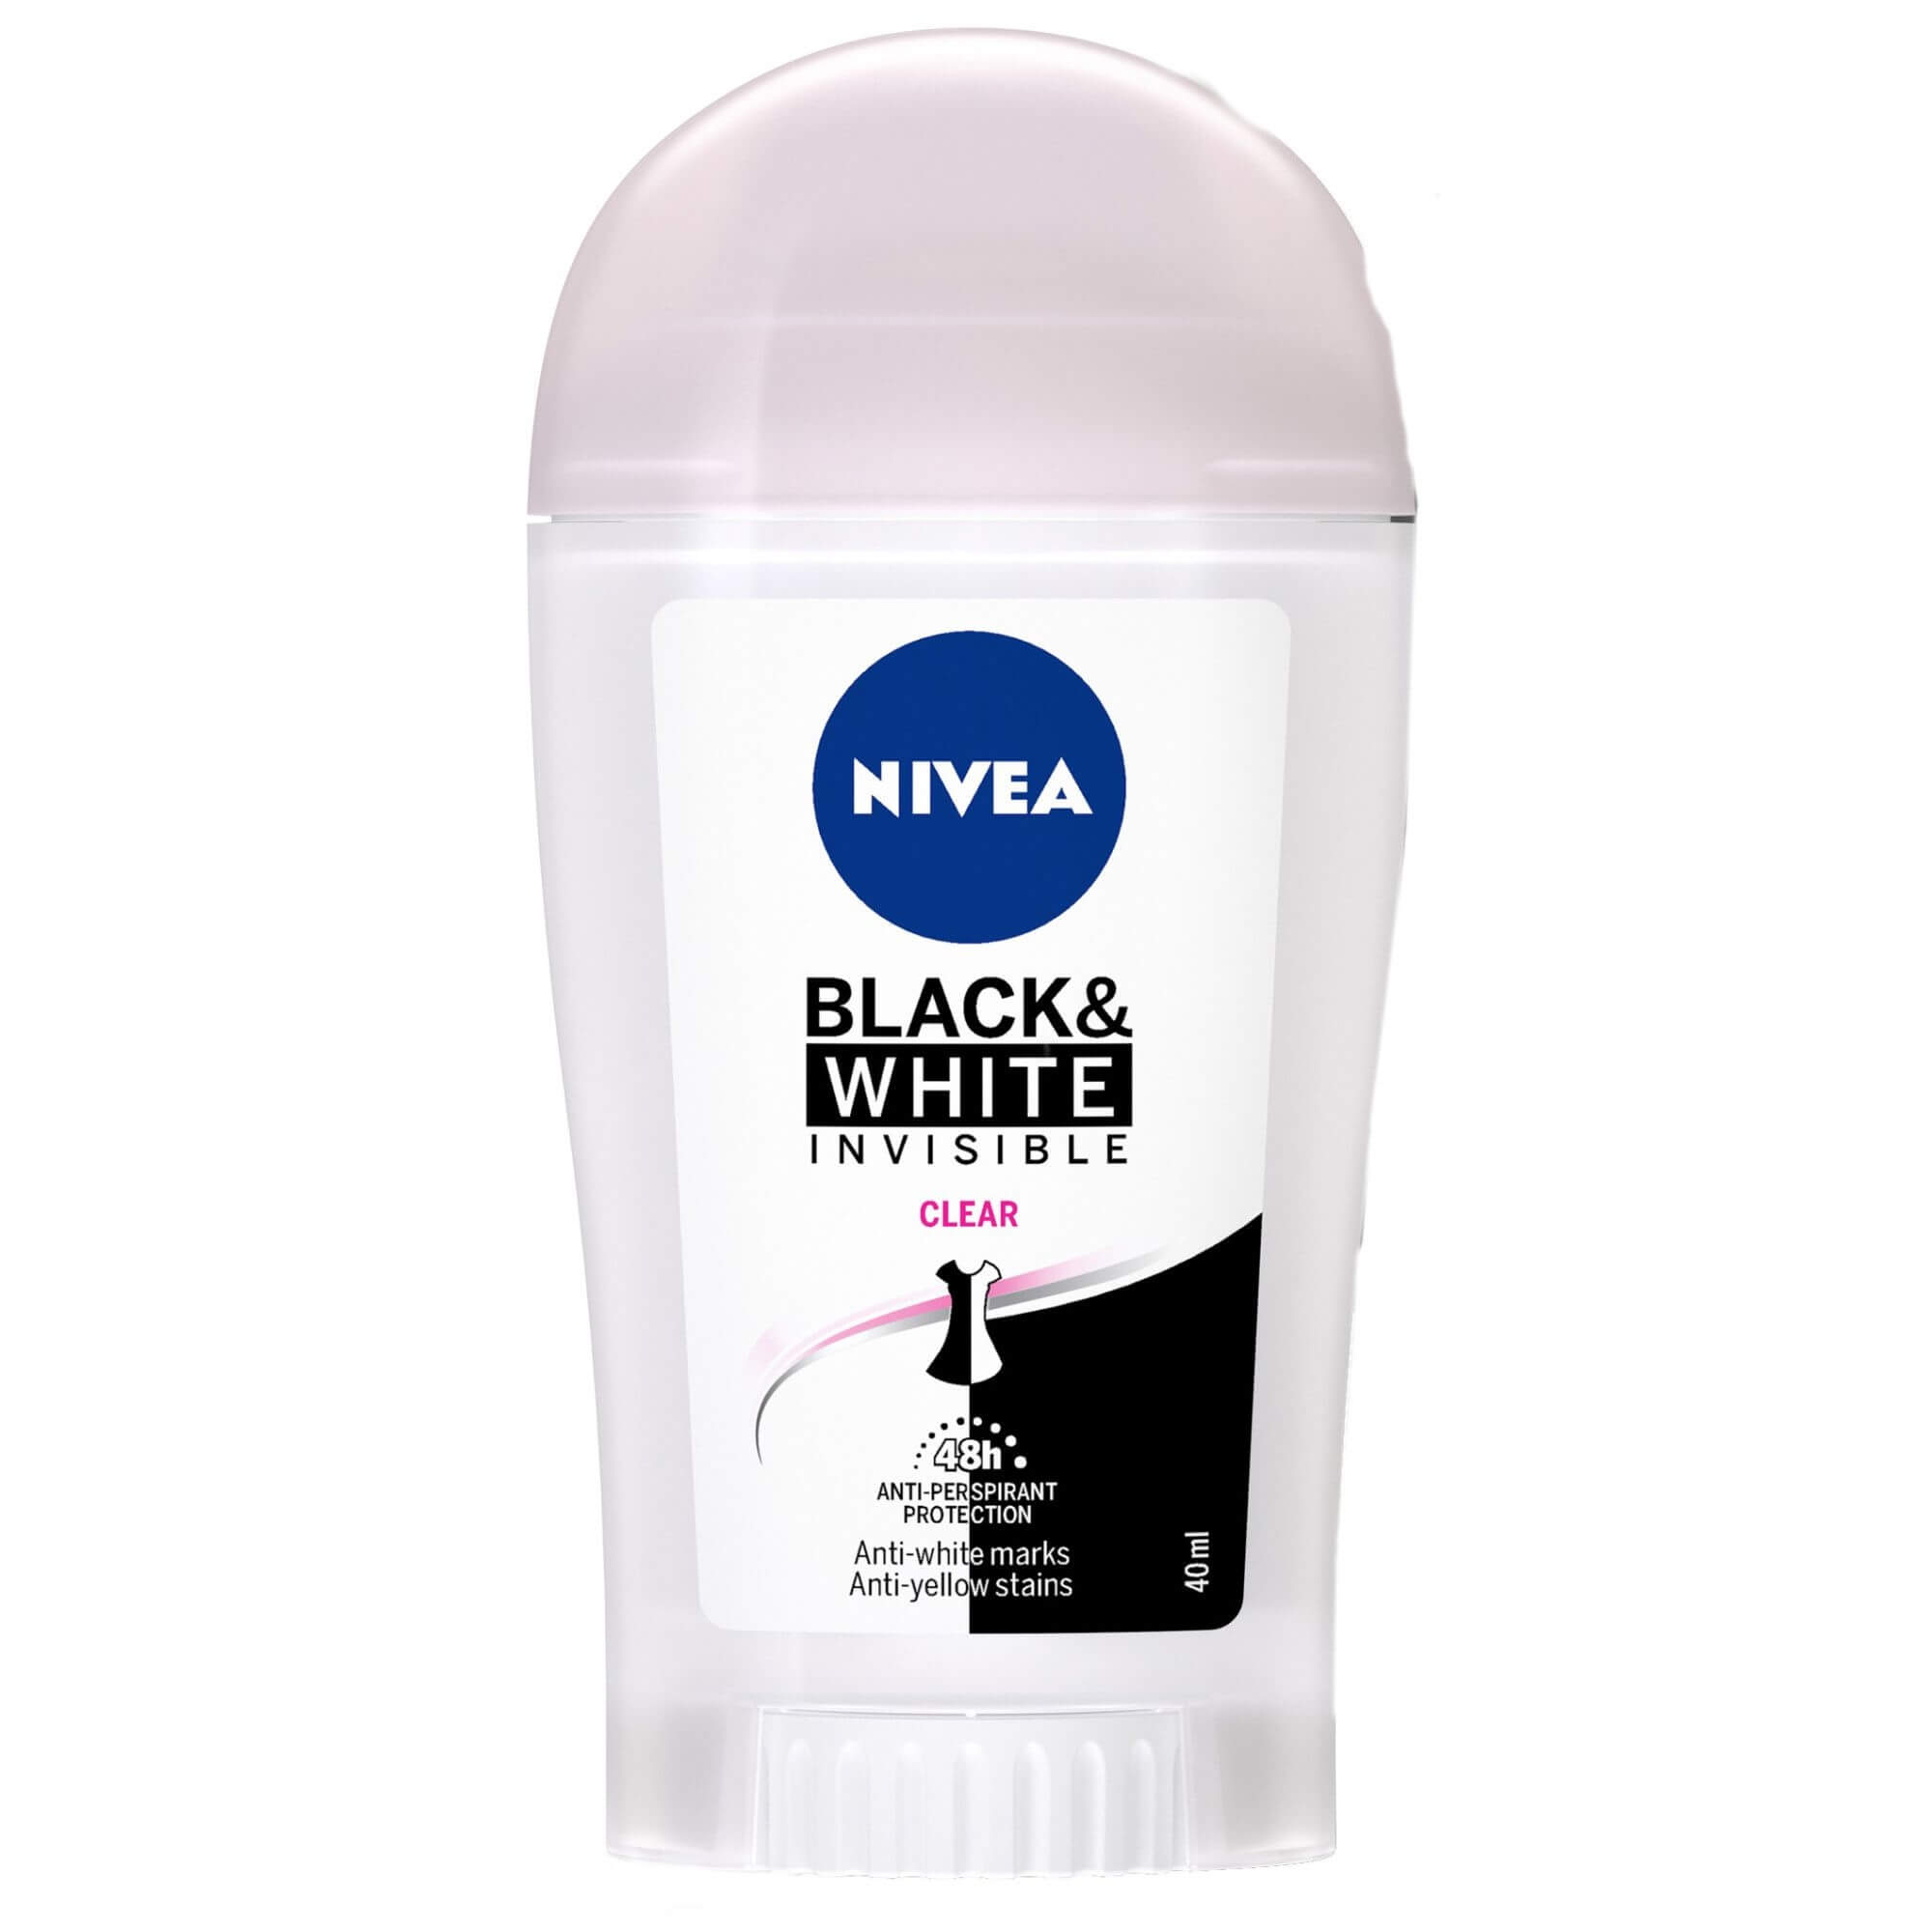 Nivea antiperspirant stick 48h Invisible Black&White Clear, 40ml